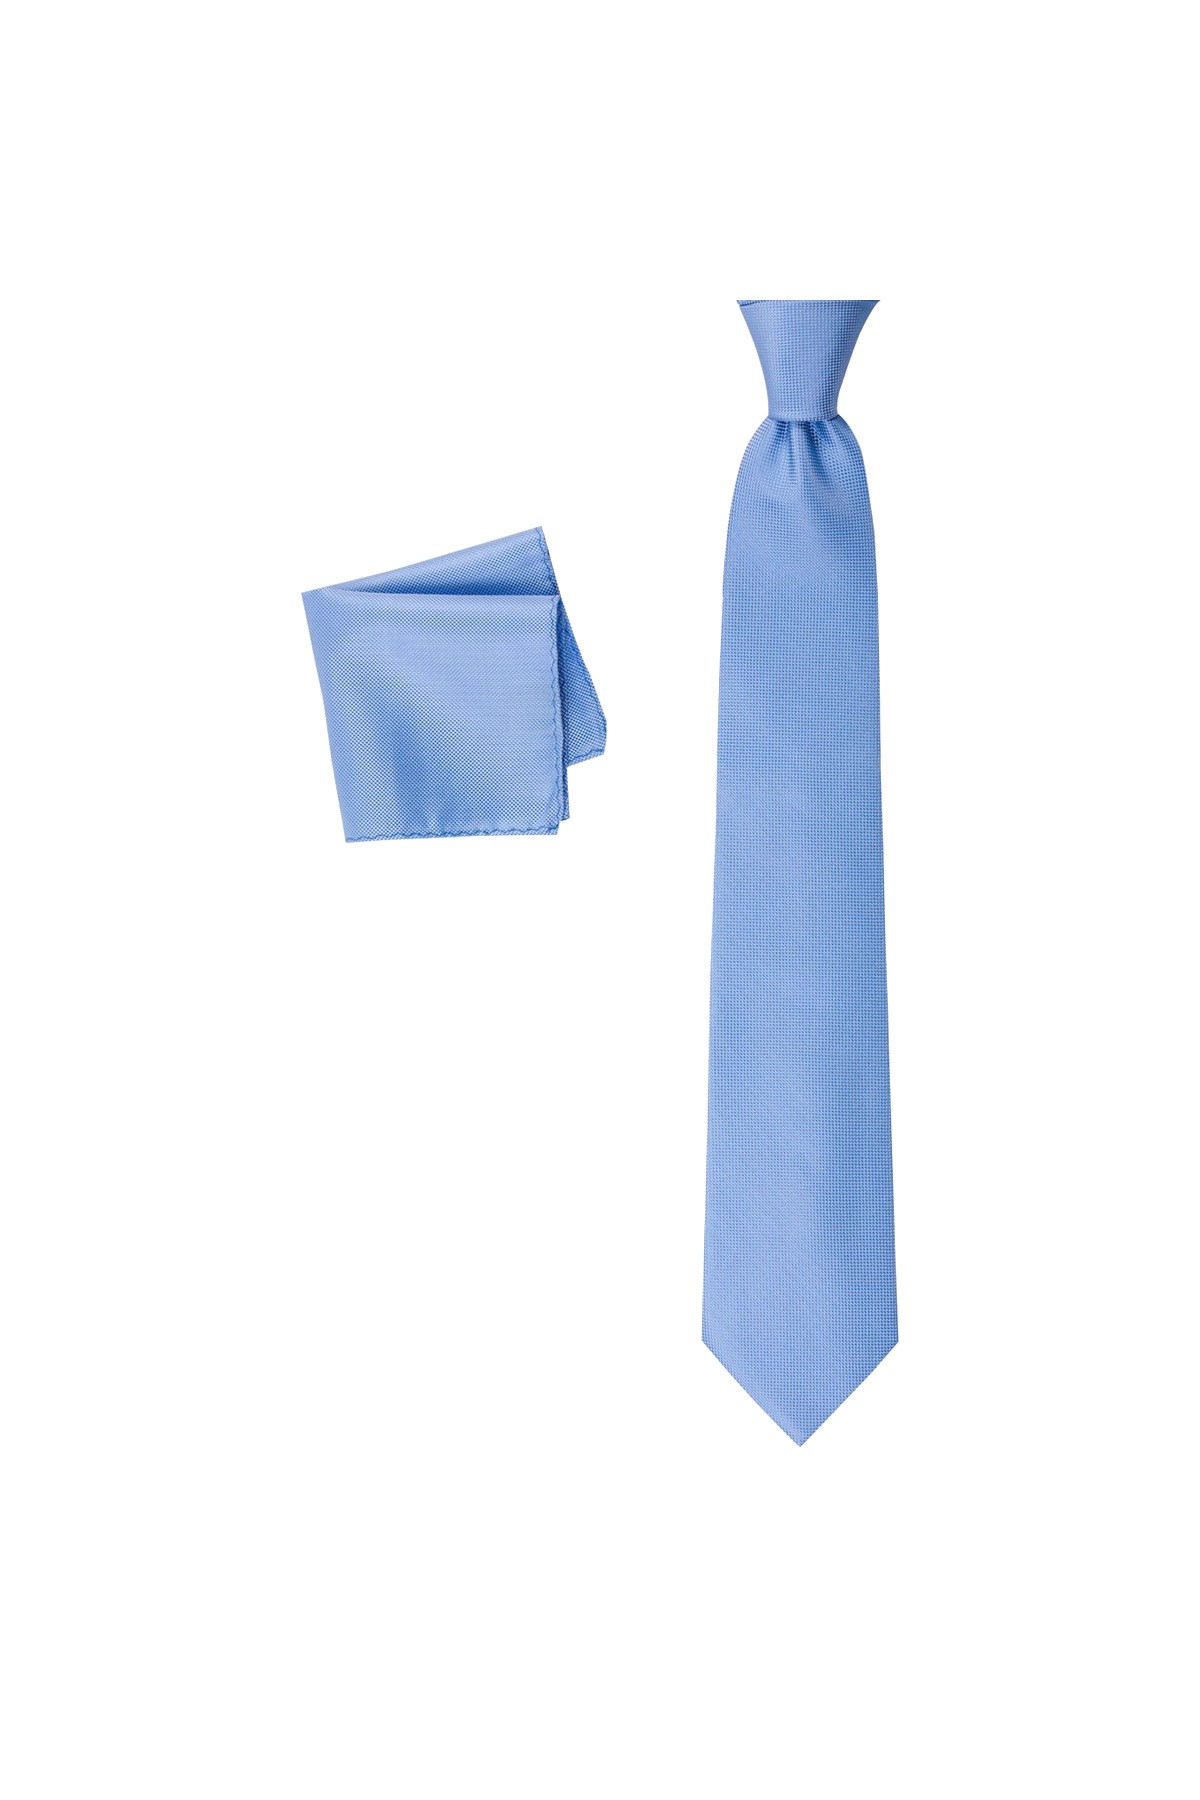 Düz renkli 8 cm genişliğinde mendilli kravat - Mavi